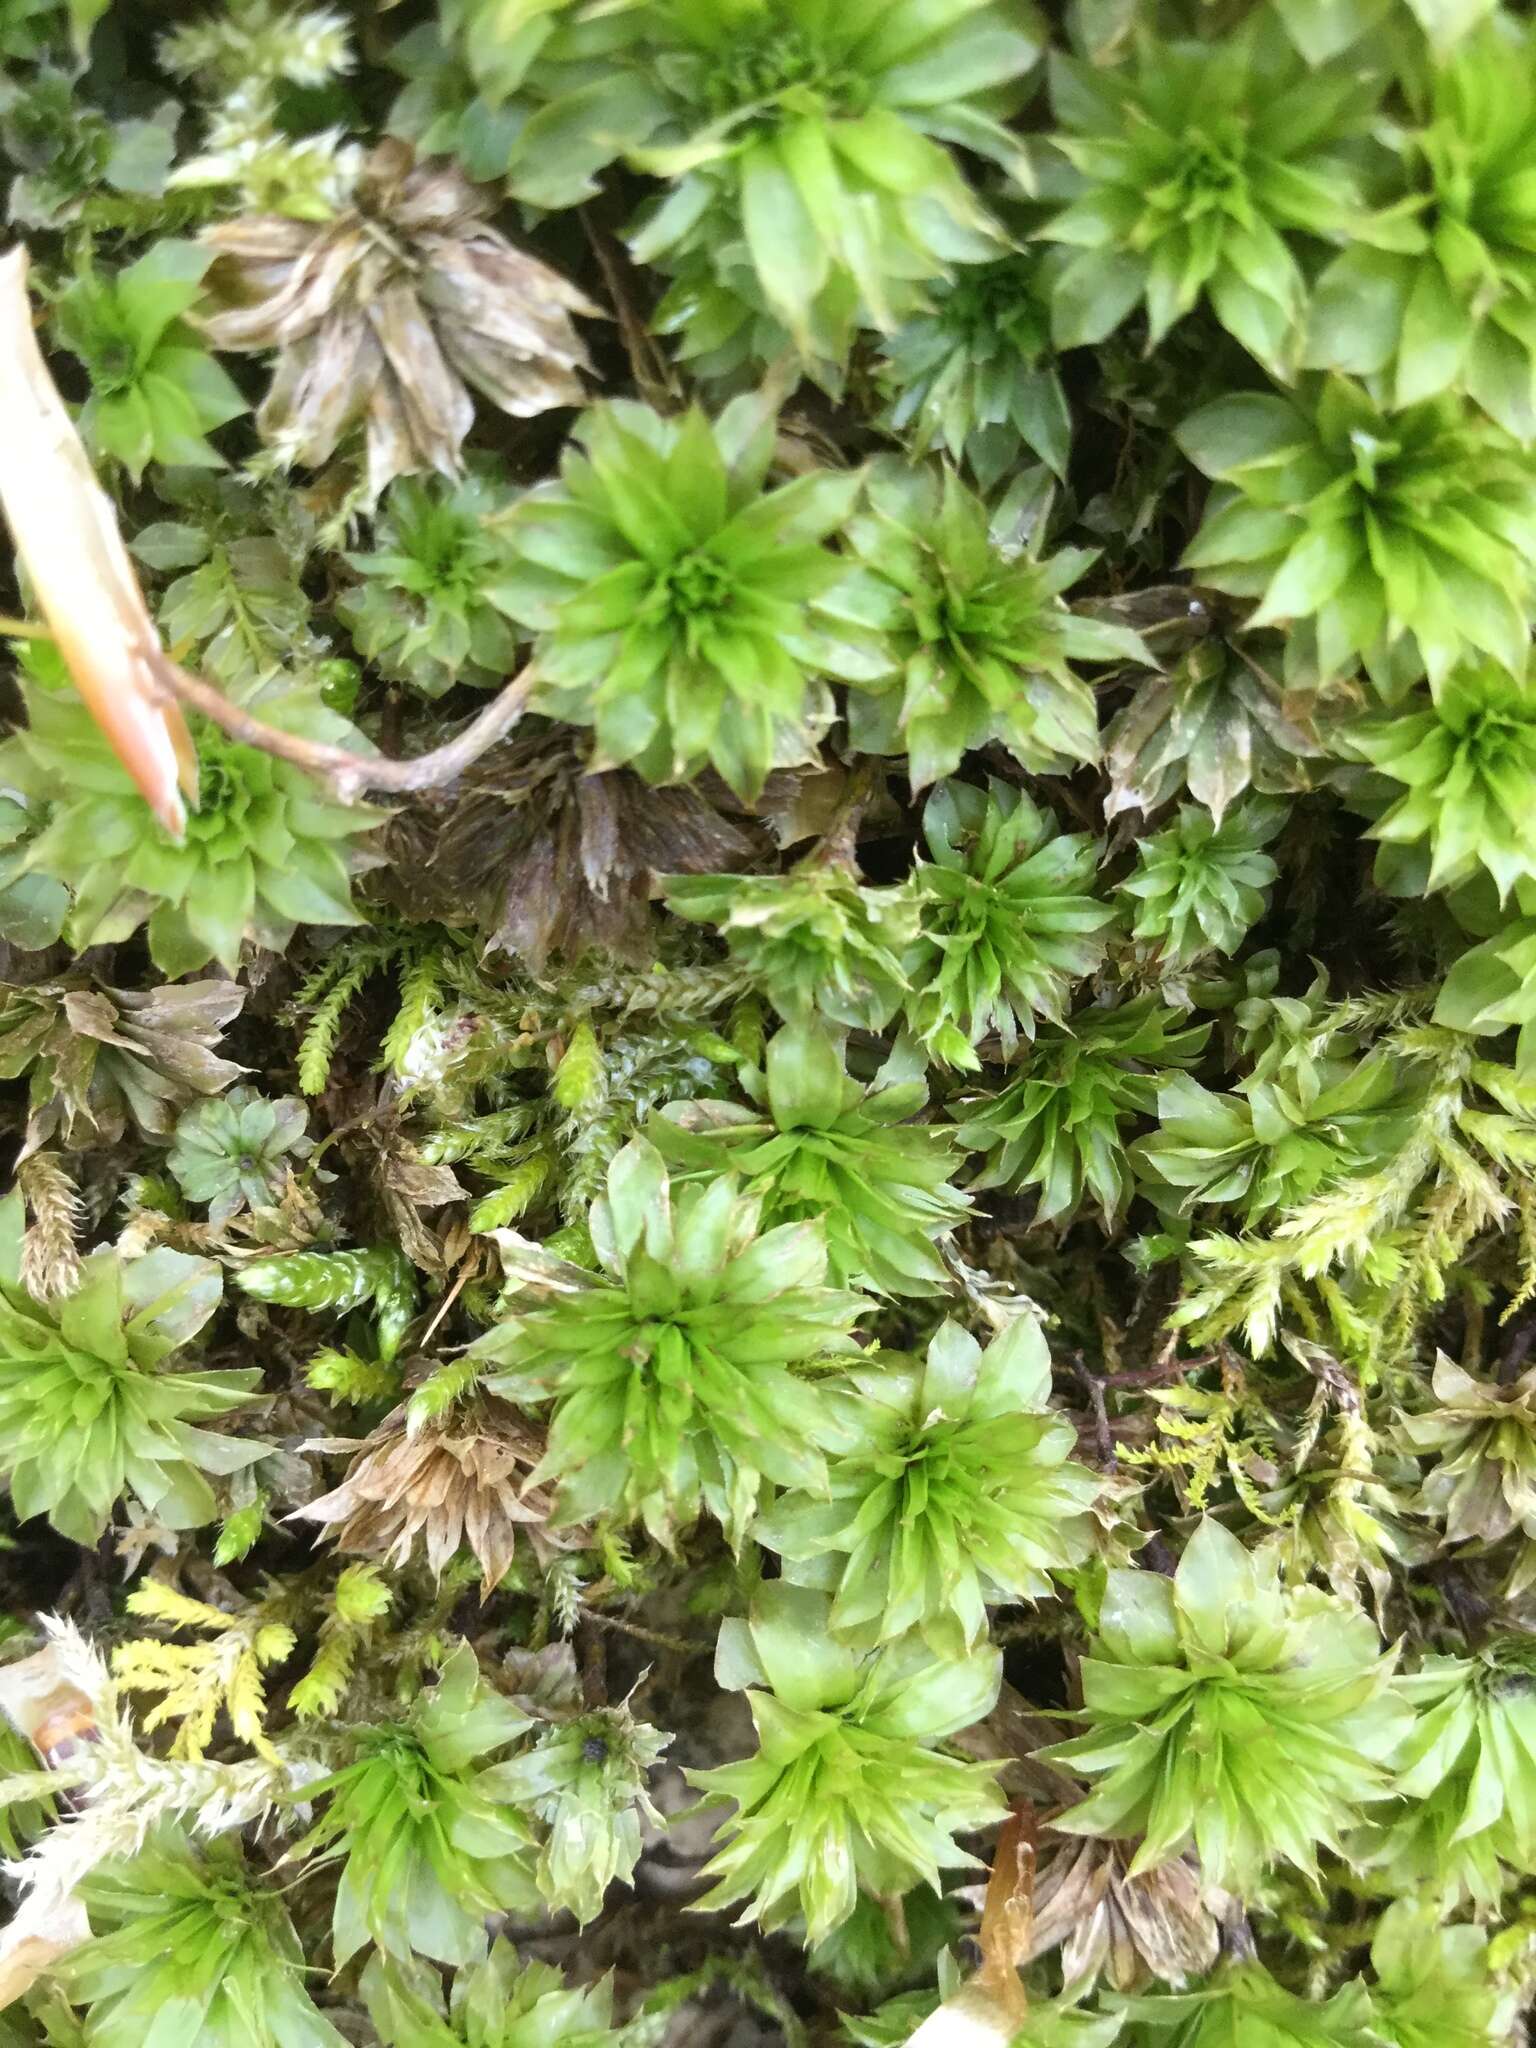 Image of Ontario rhodobryum moss